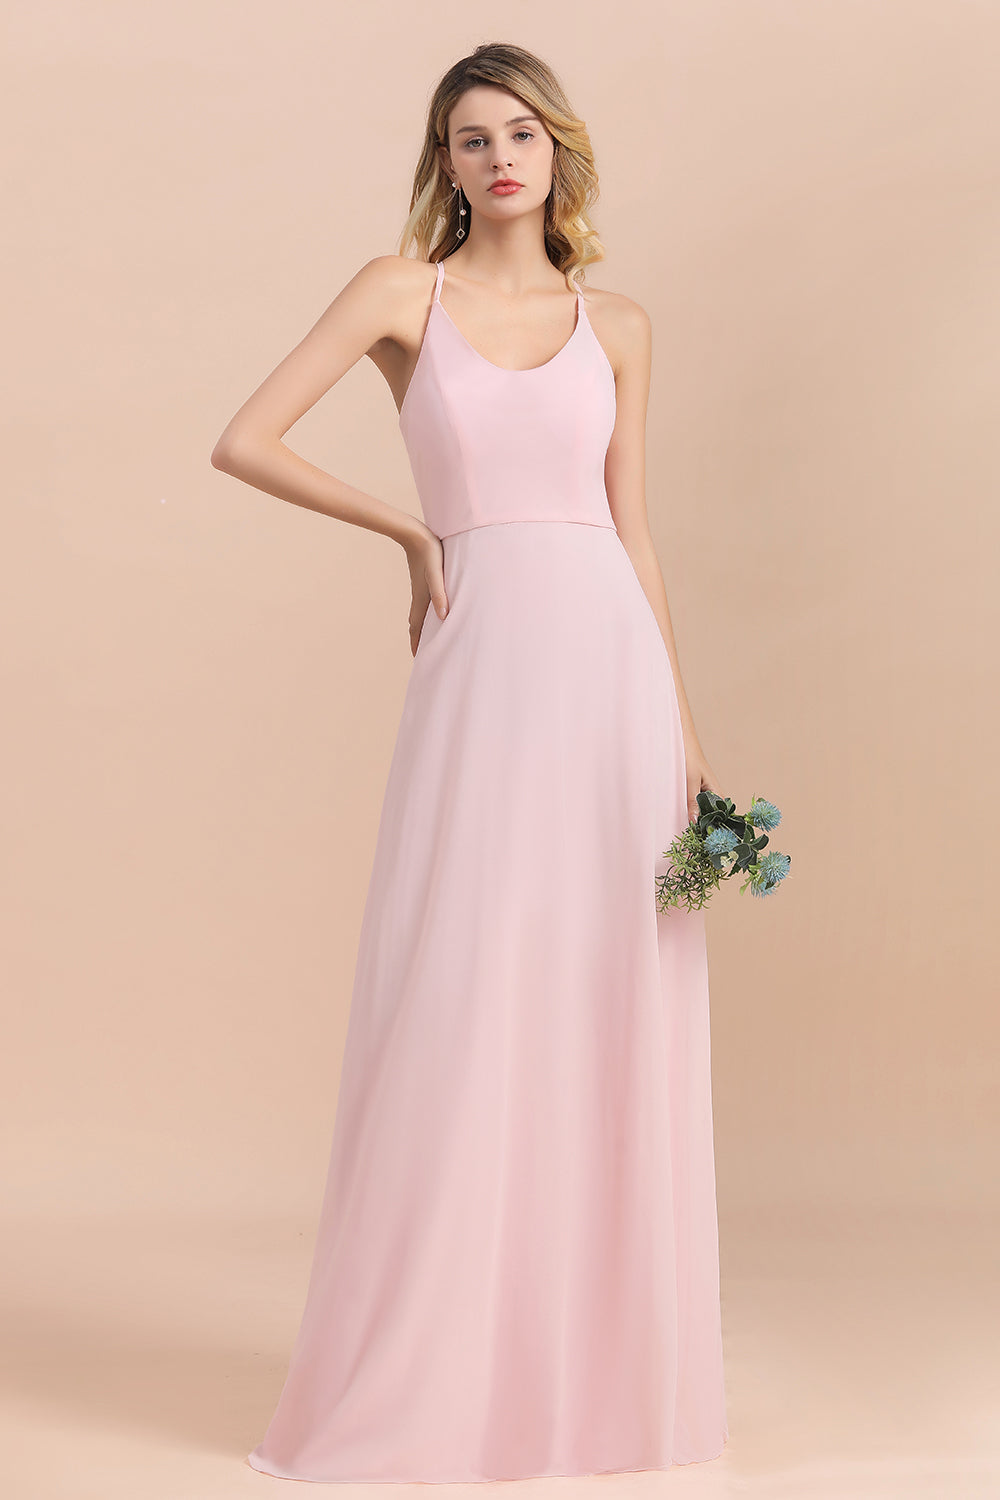 Chic Spaghetti Straps Chiffon Pink Bridesmaid Dresses with Crisscross Back-27dress